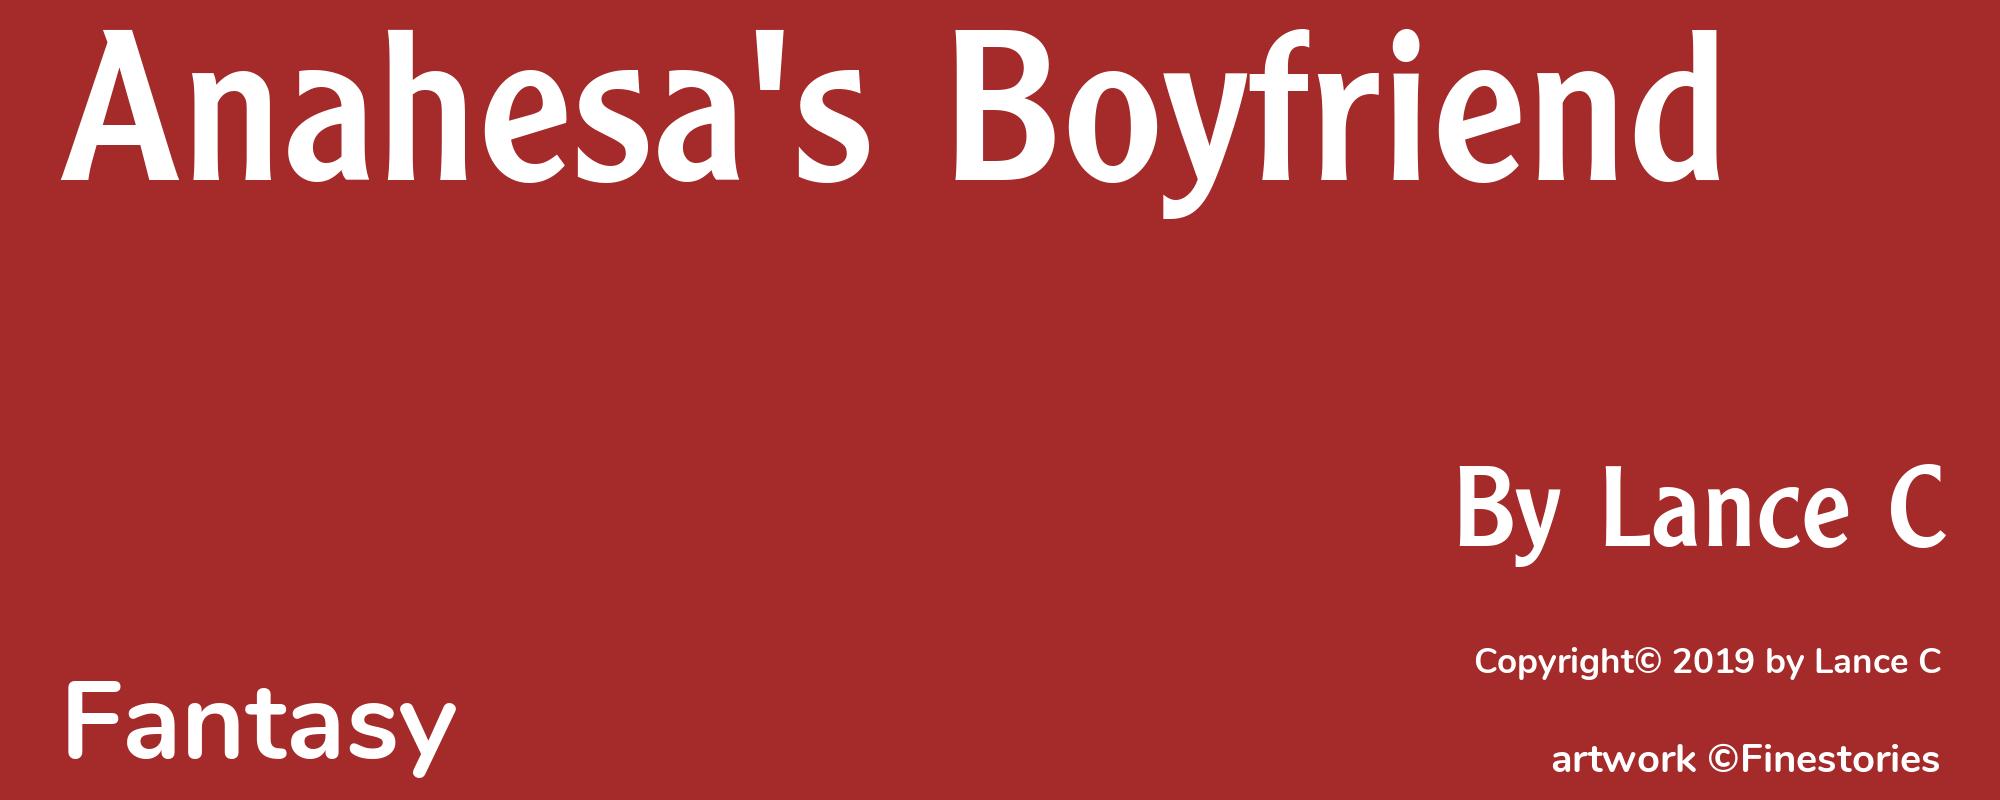 Anahesa's Boyfriend - Cover